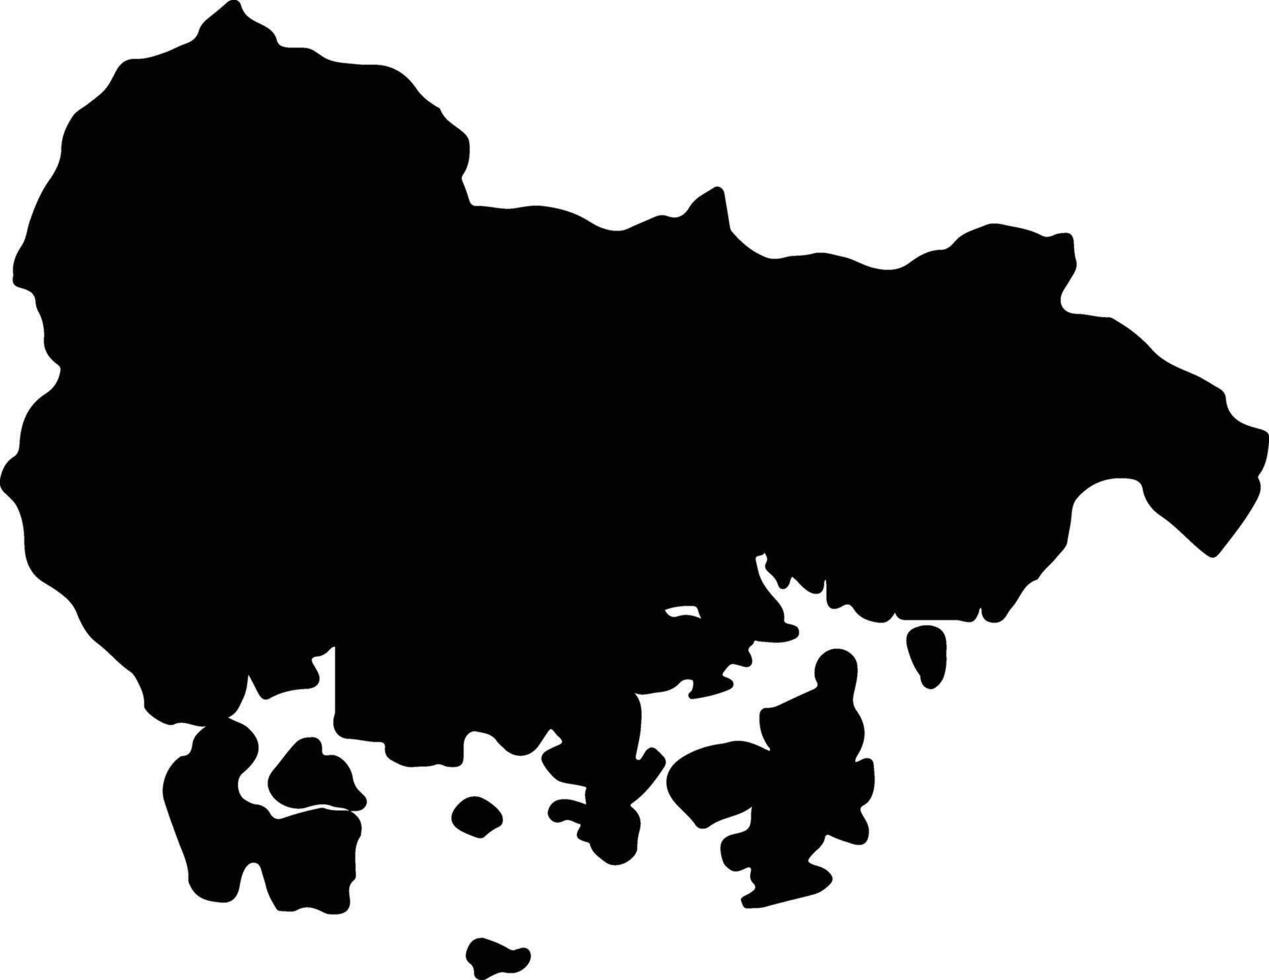 South Gyeongsang South Korea silhouette map vector